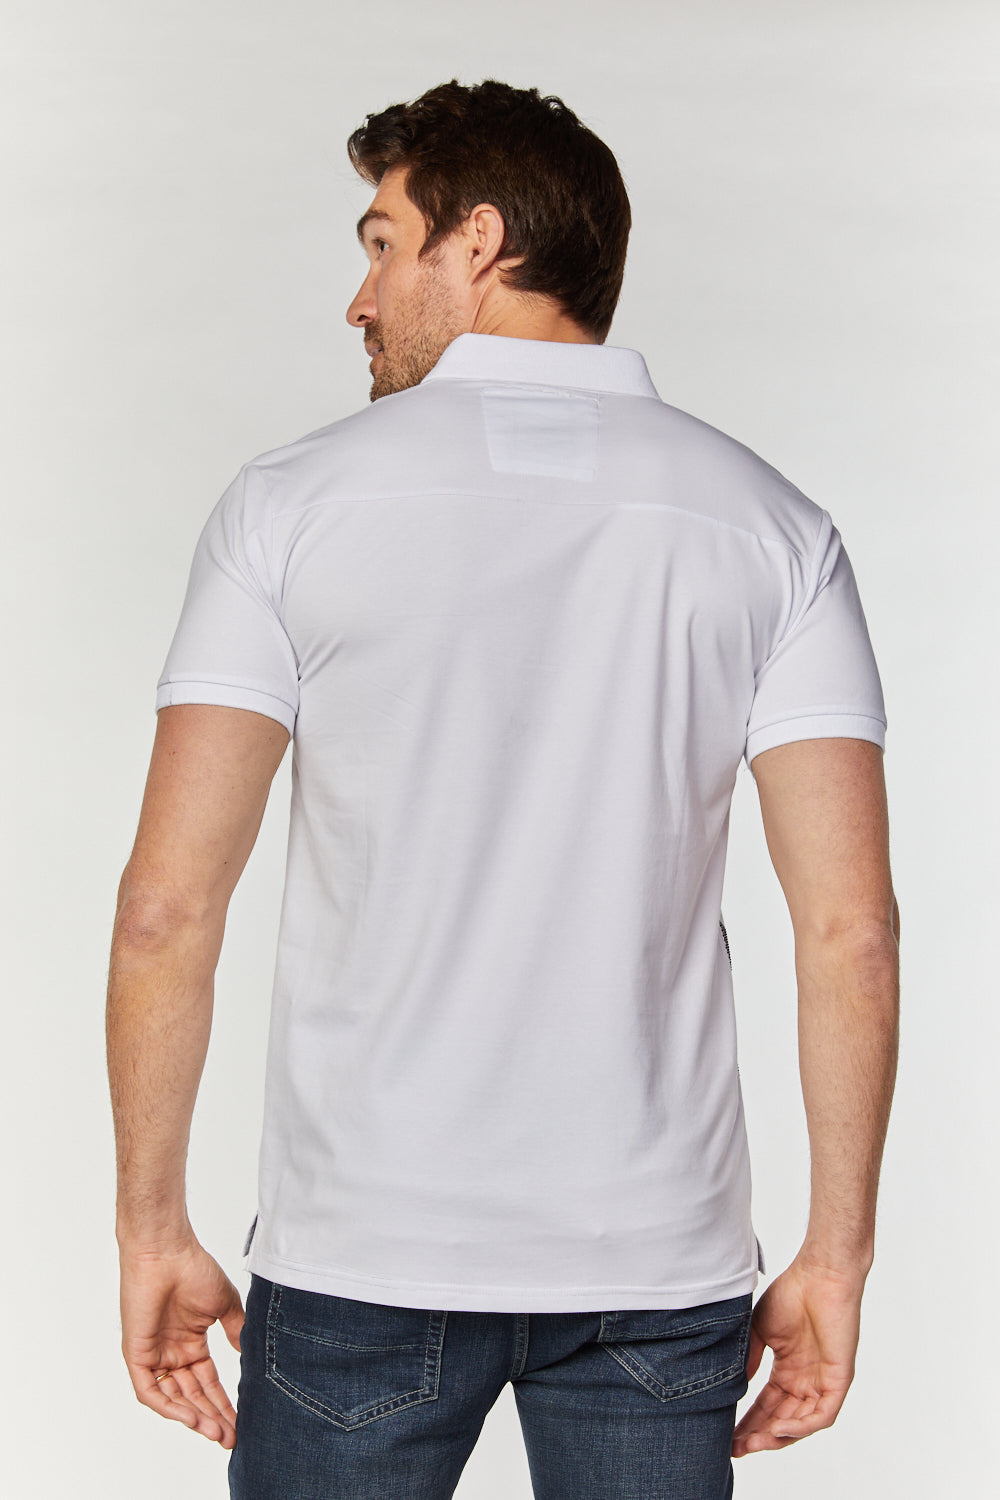 Men's Cotton Modern Fit Rhinestone White Polo